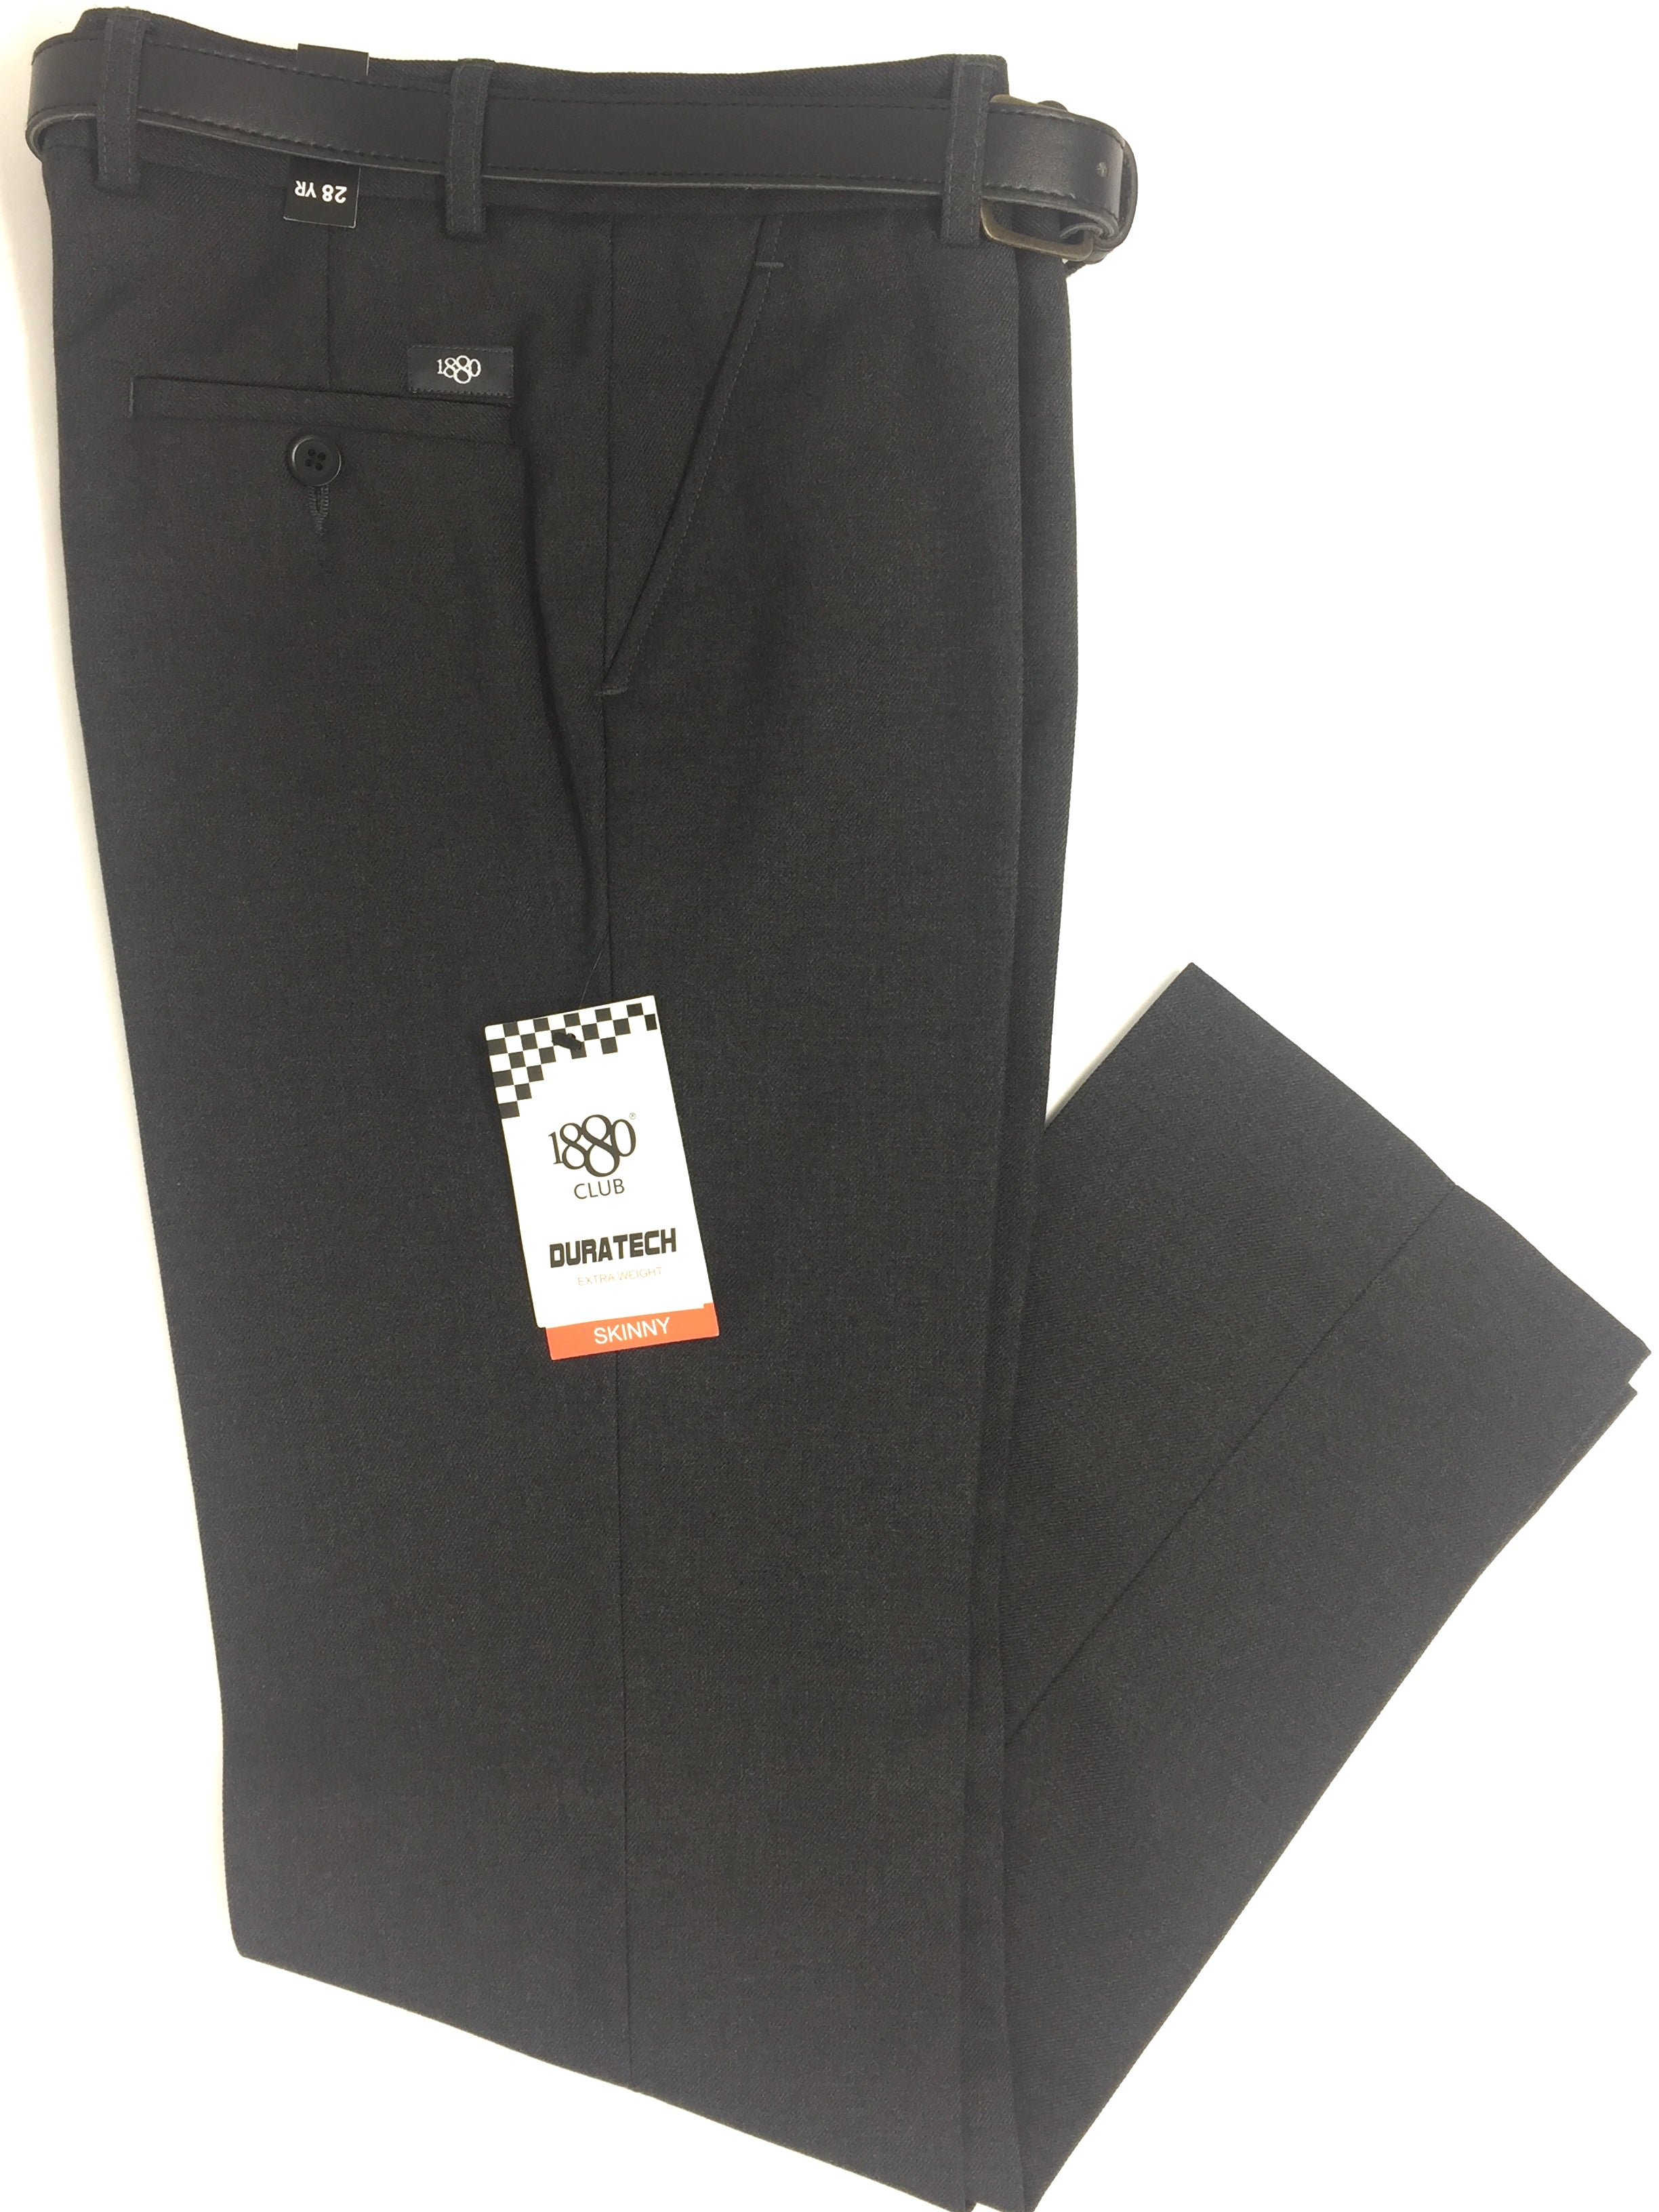 Boys Black School Trousers Skinny Fit Leg 3/4-17/18 Years Adjustable Waist  | eBay